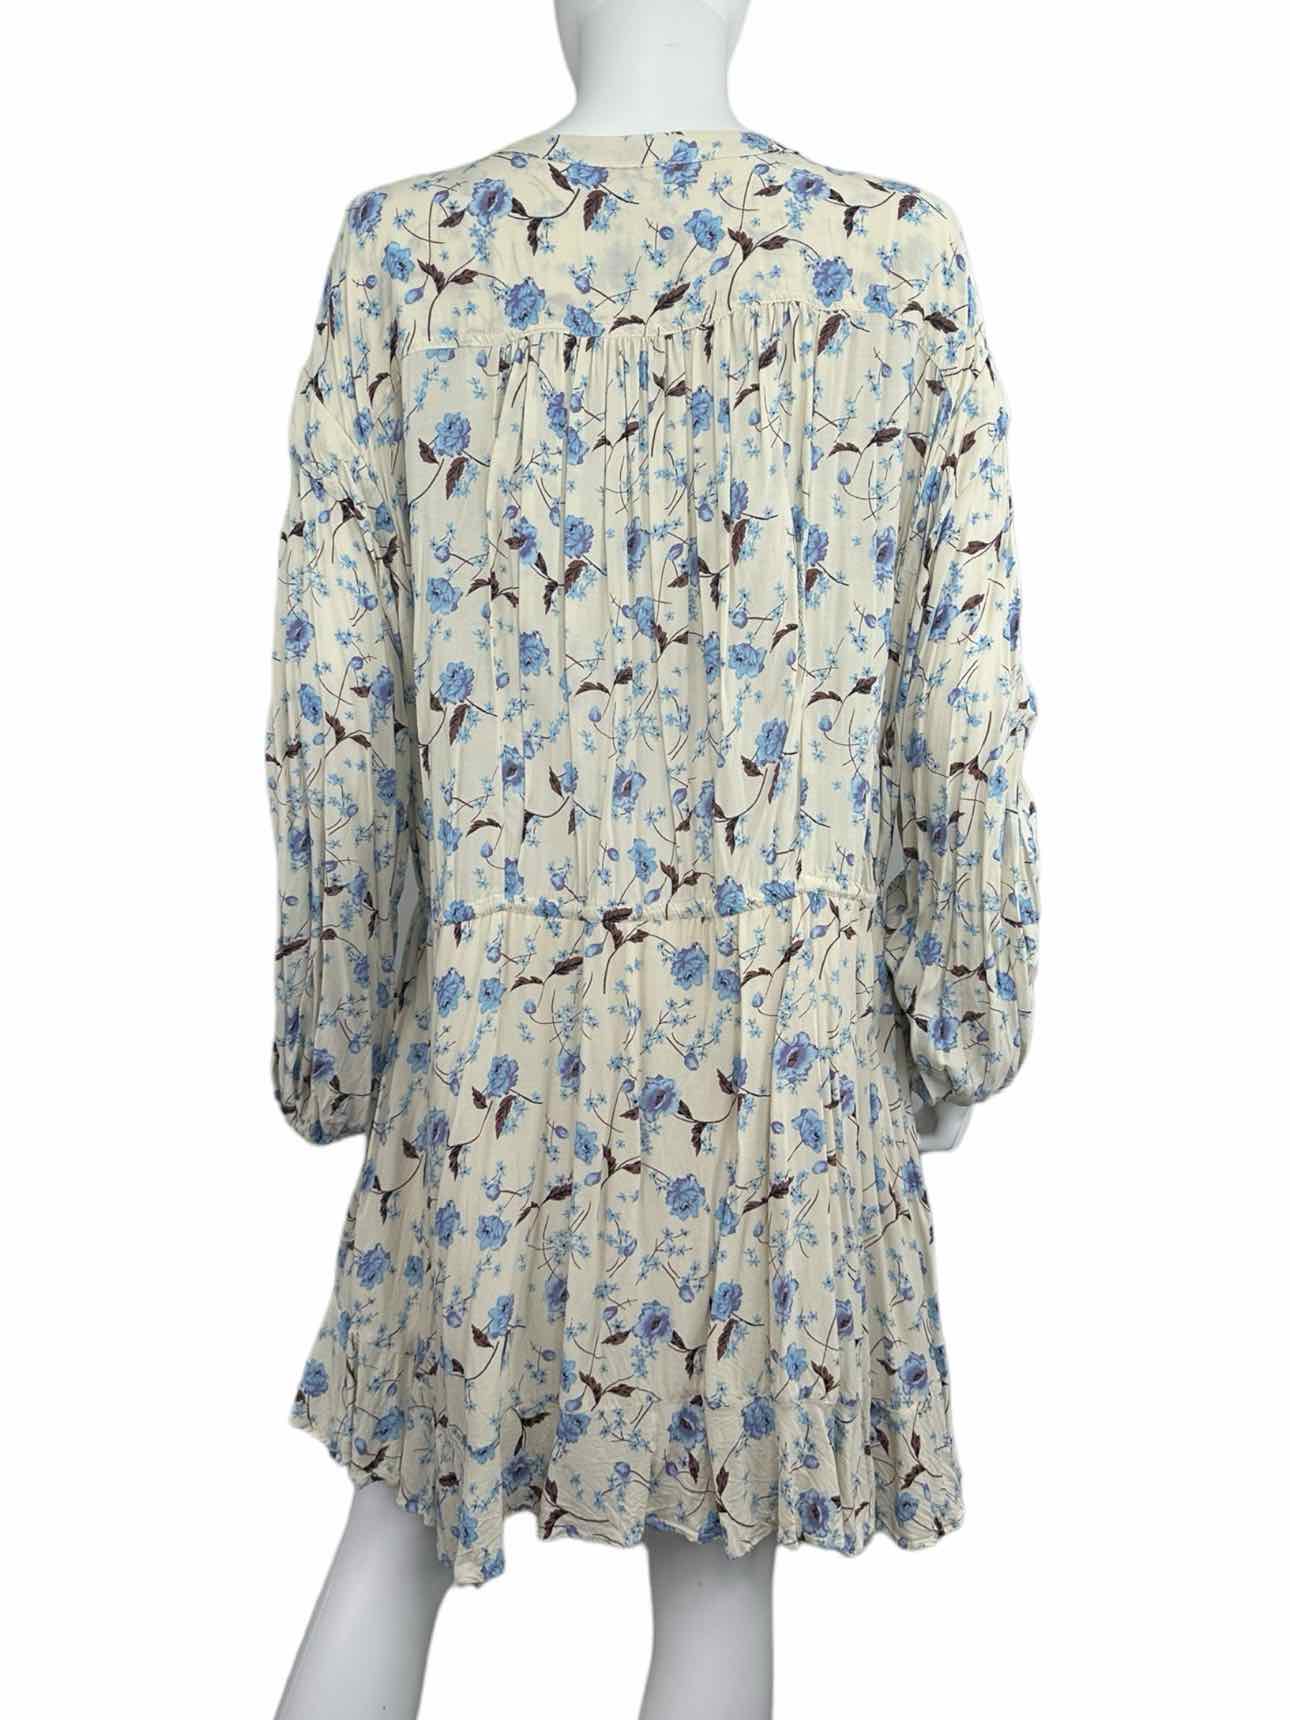 Free People Blue Floral Print Dress Size L